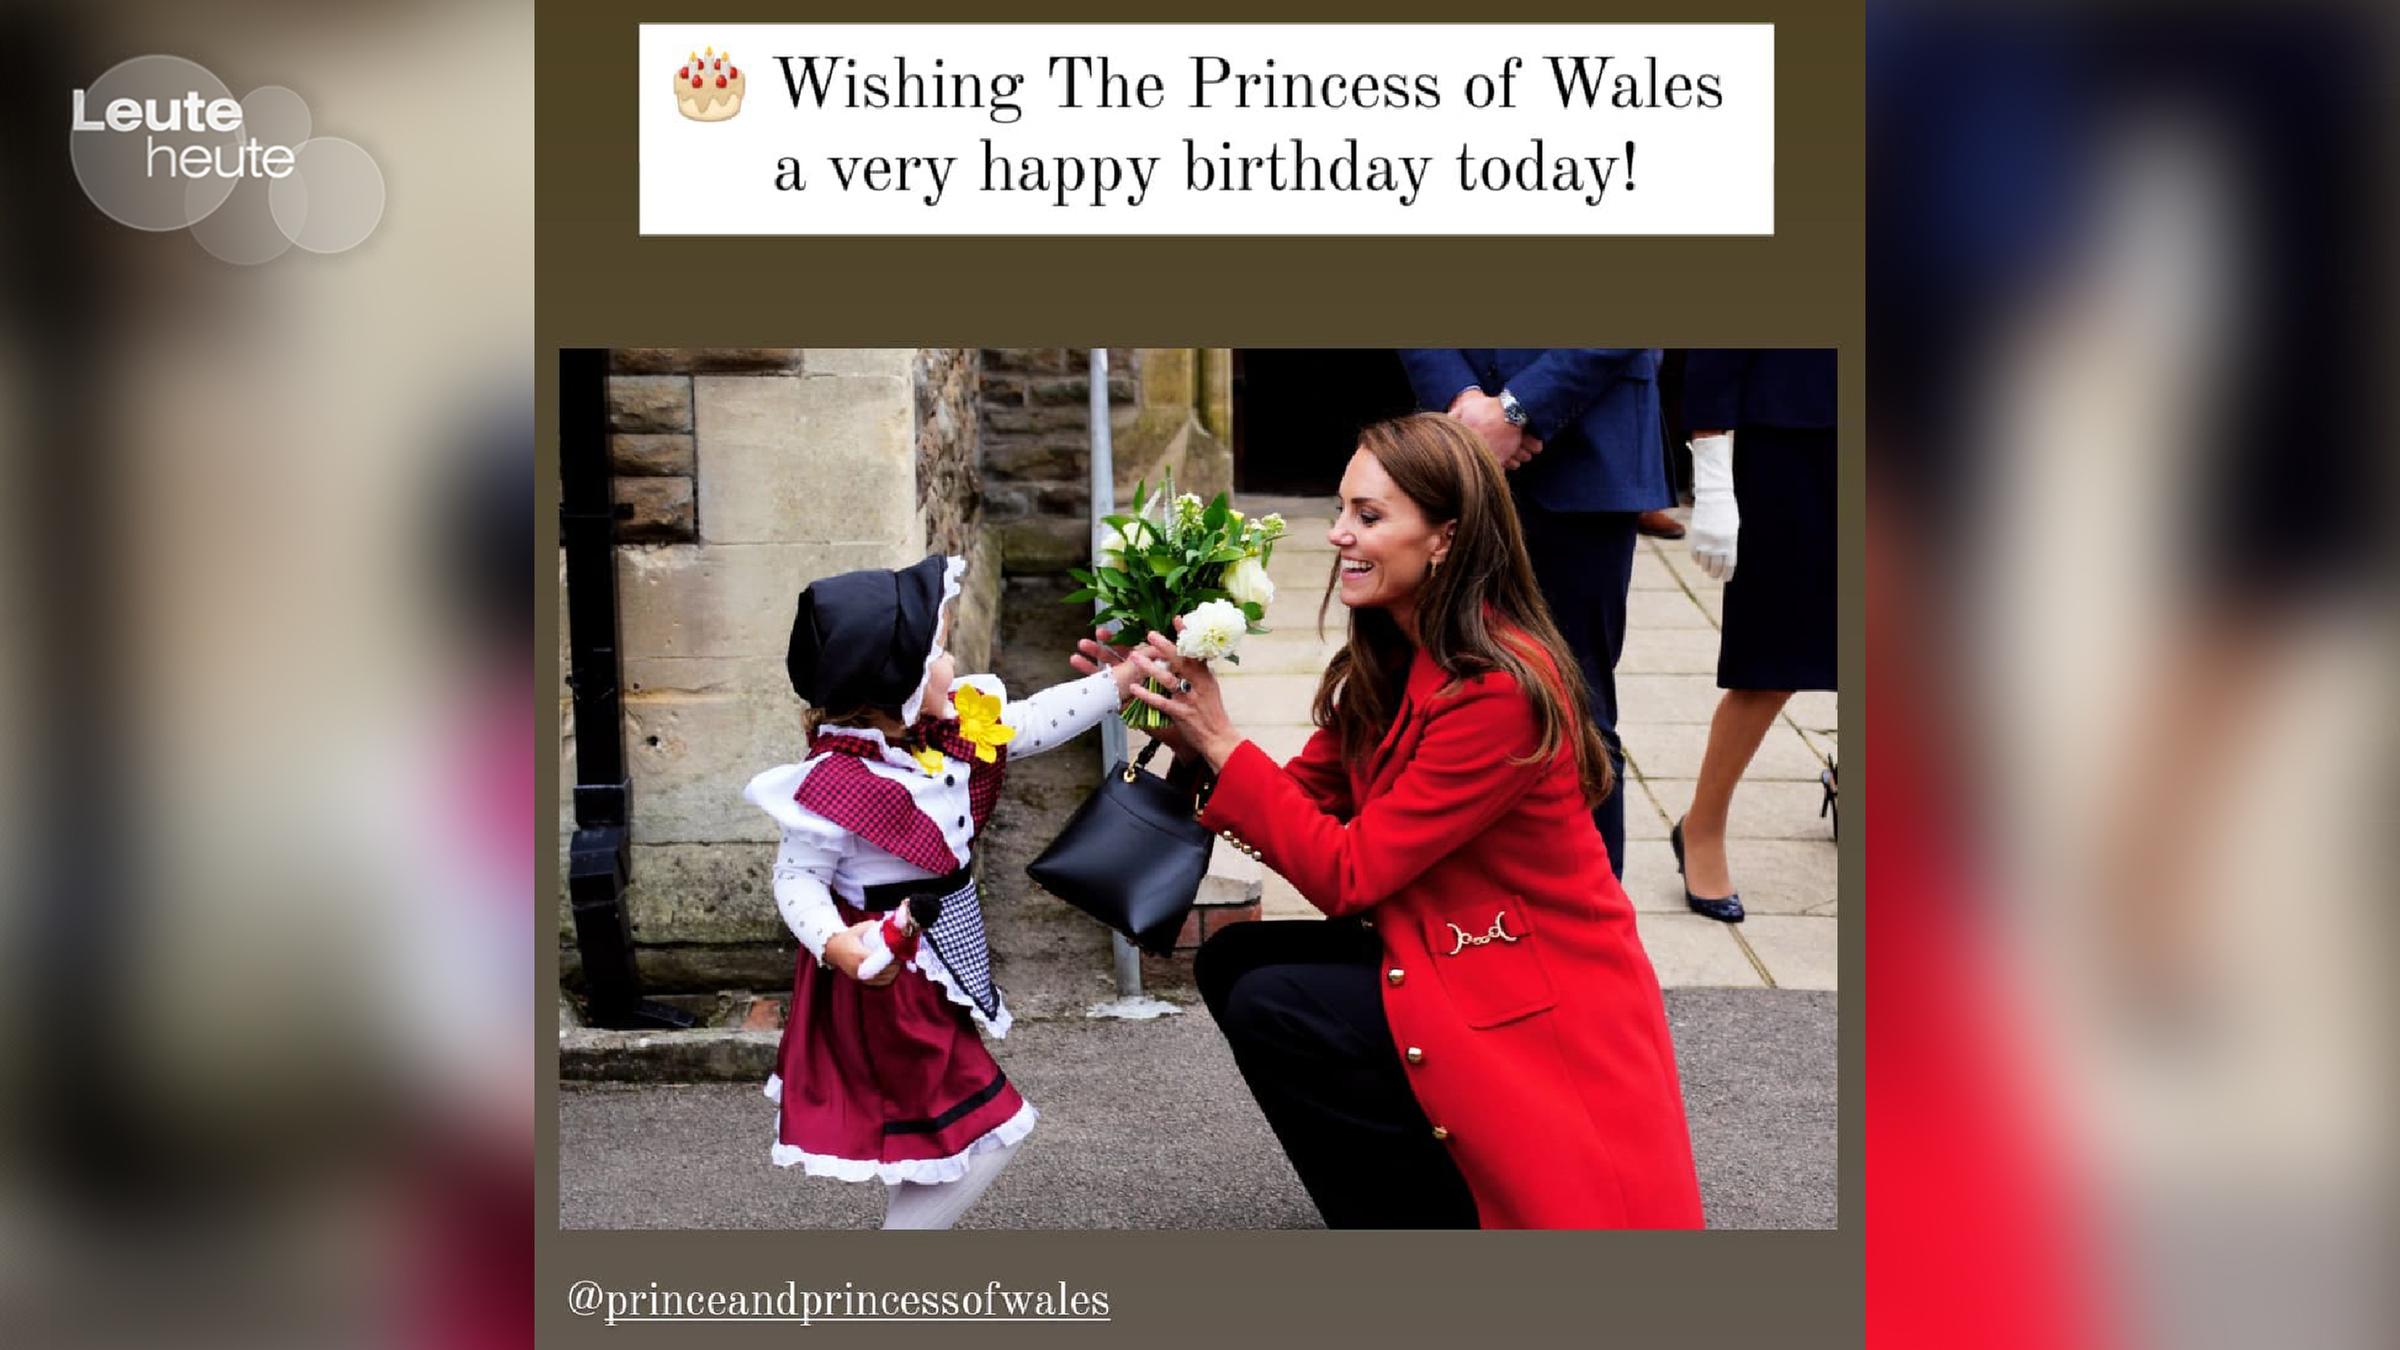 Catherine, Princess of Wales